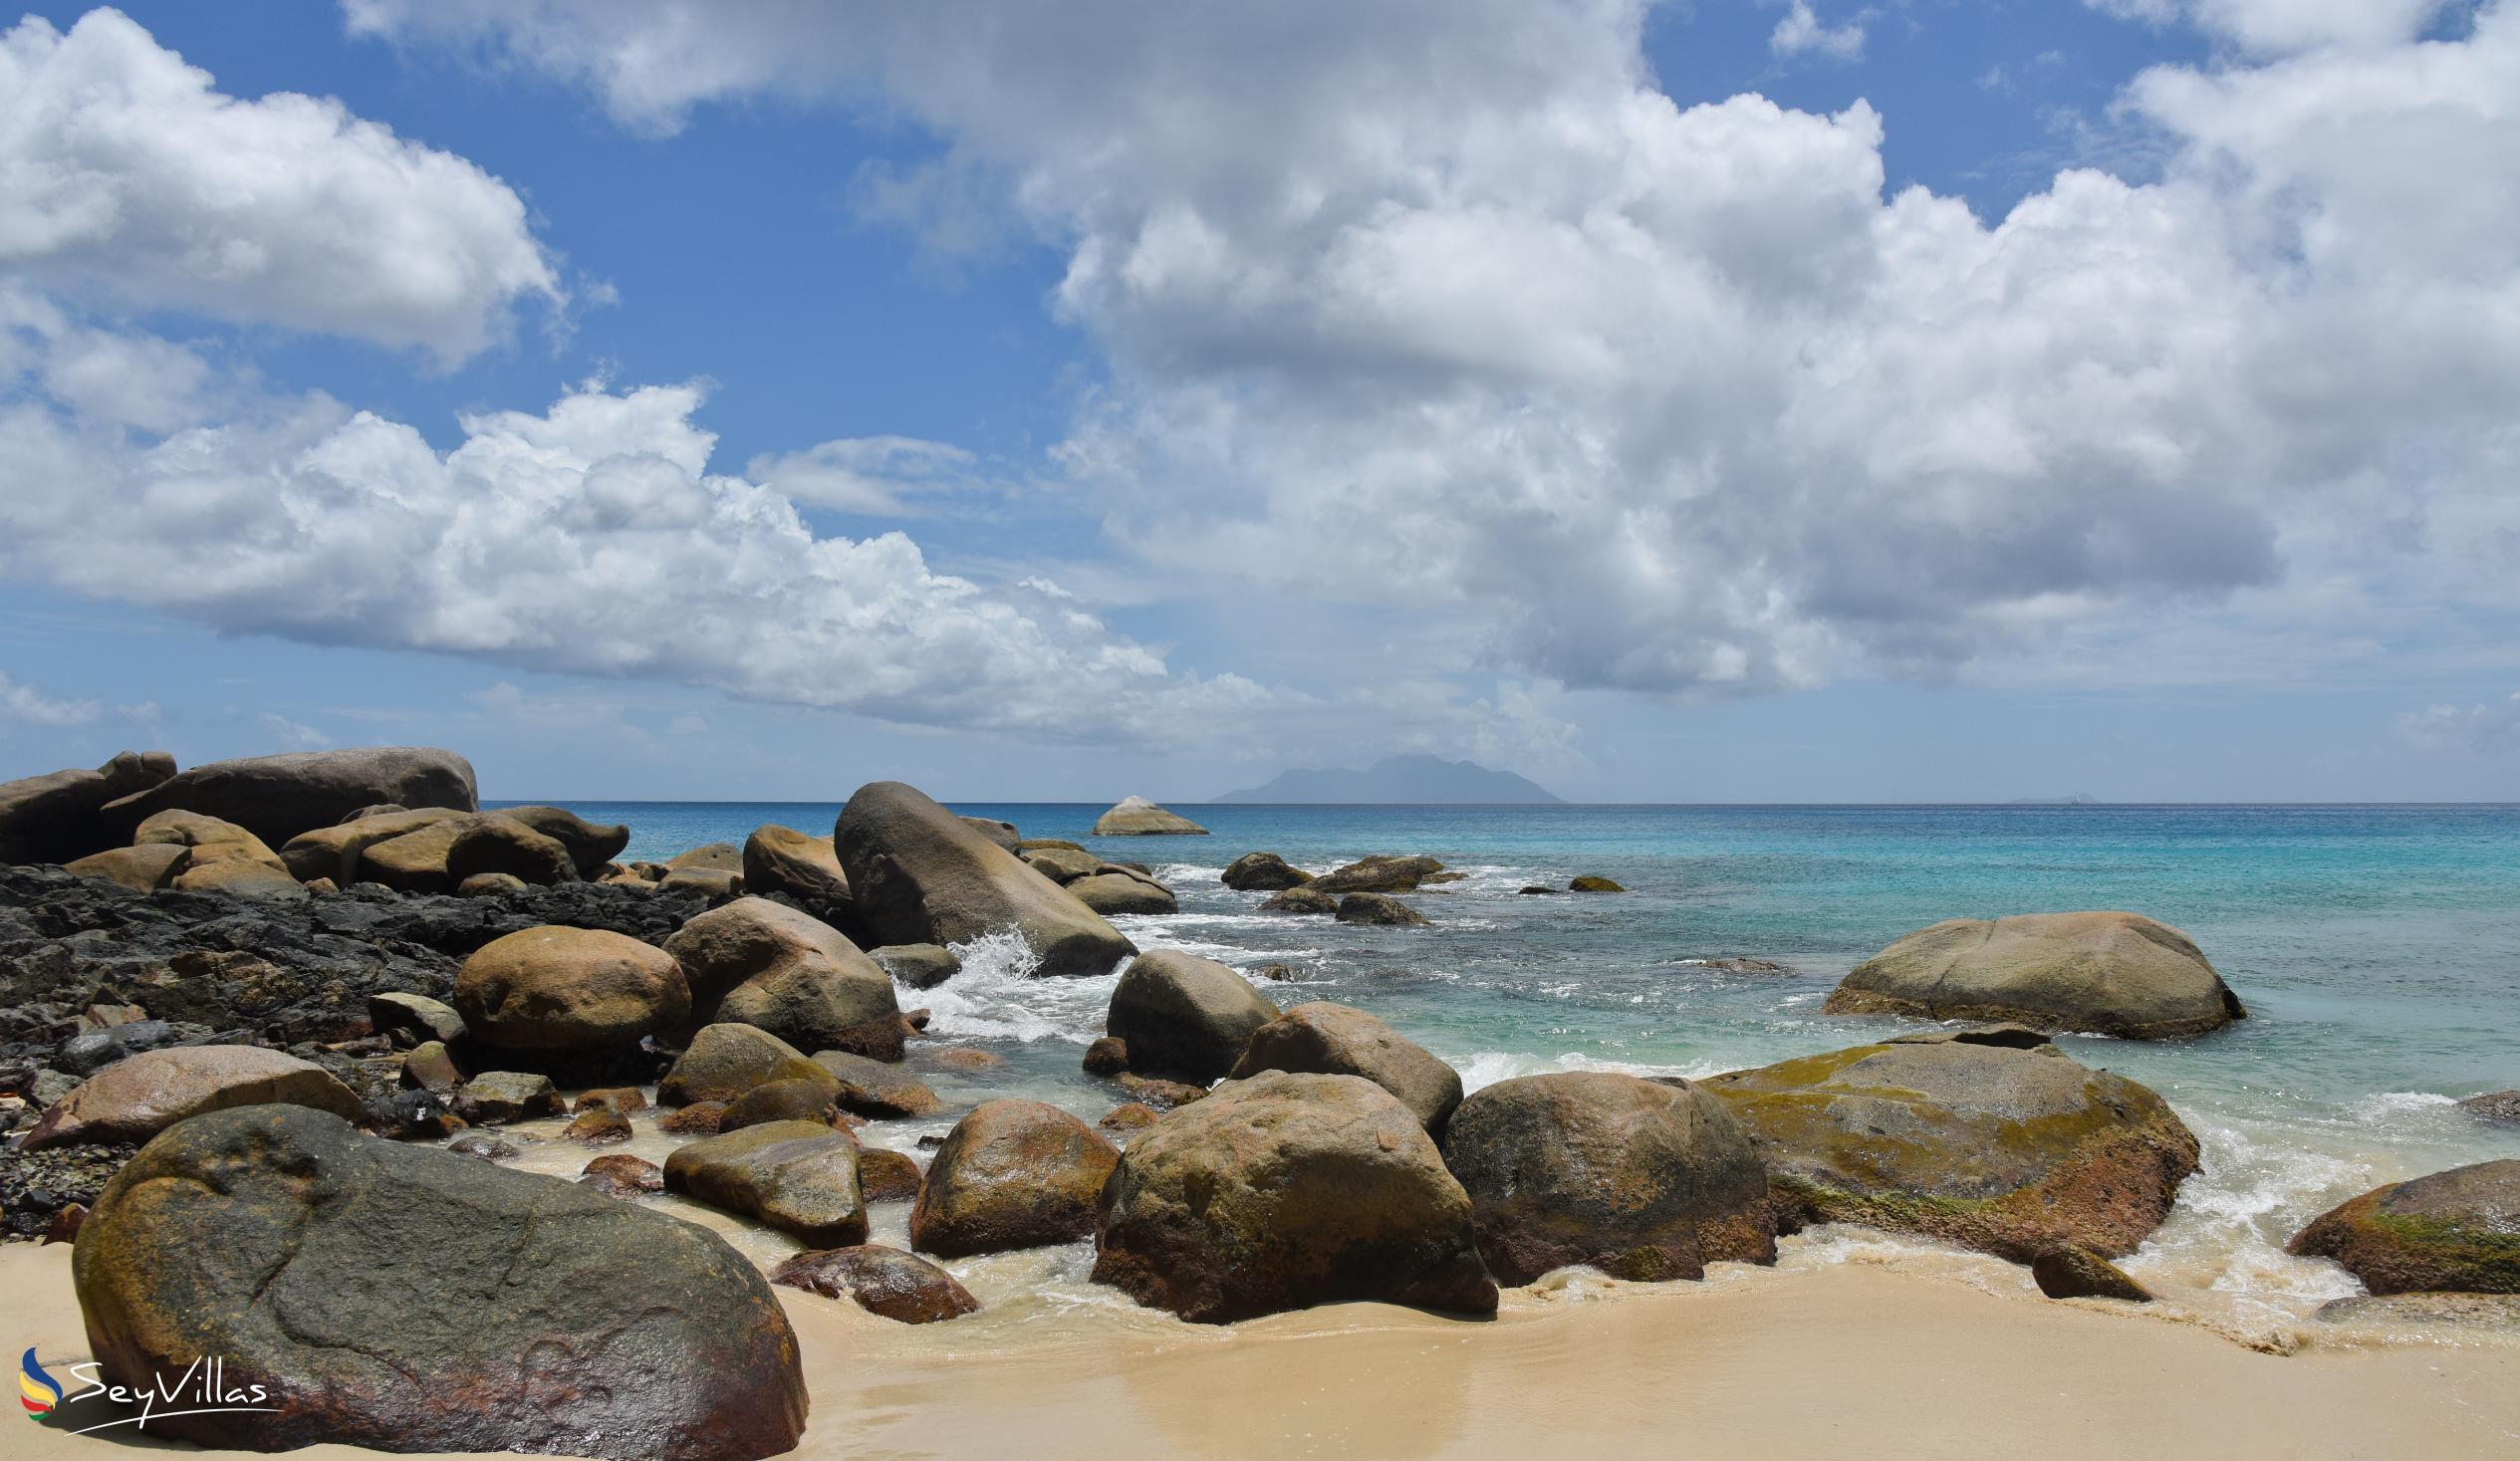 Photo 16: Tusculum Beach - Mahé (Seychelles)